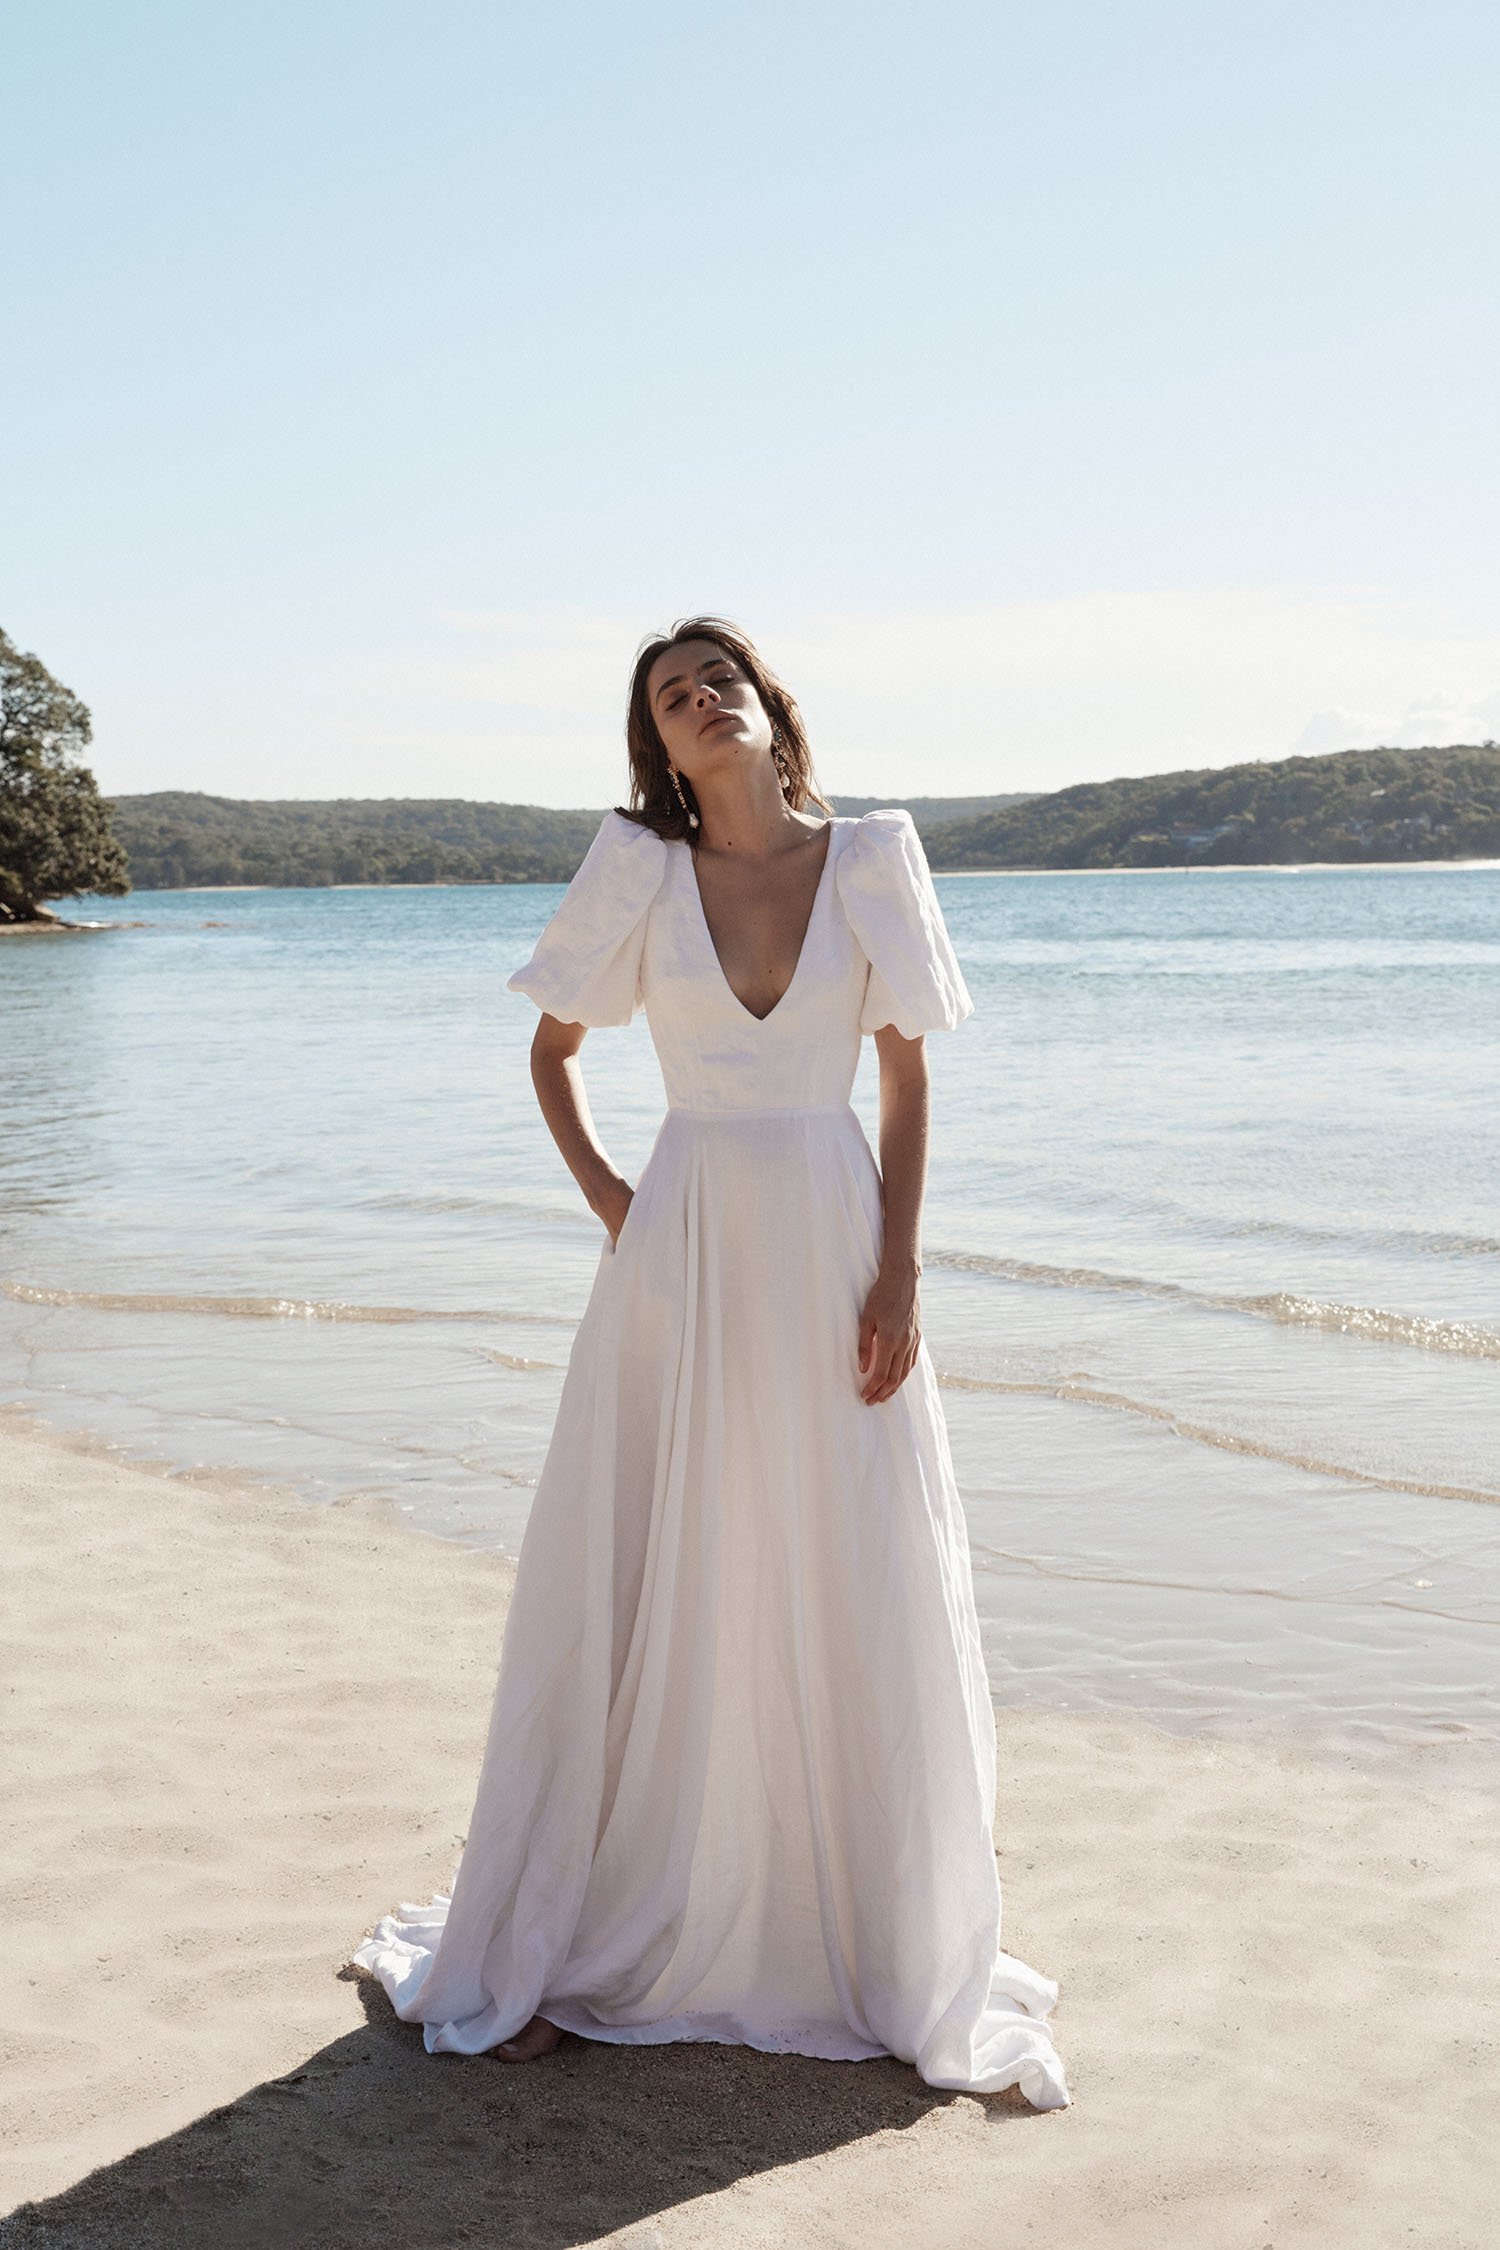  A bride standing on a beach wearing a long white wedding dress. 